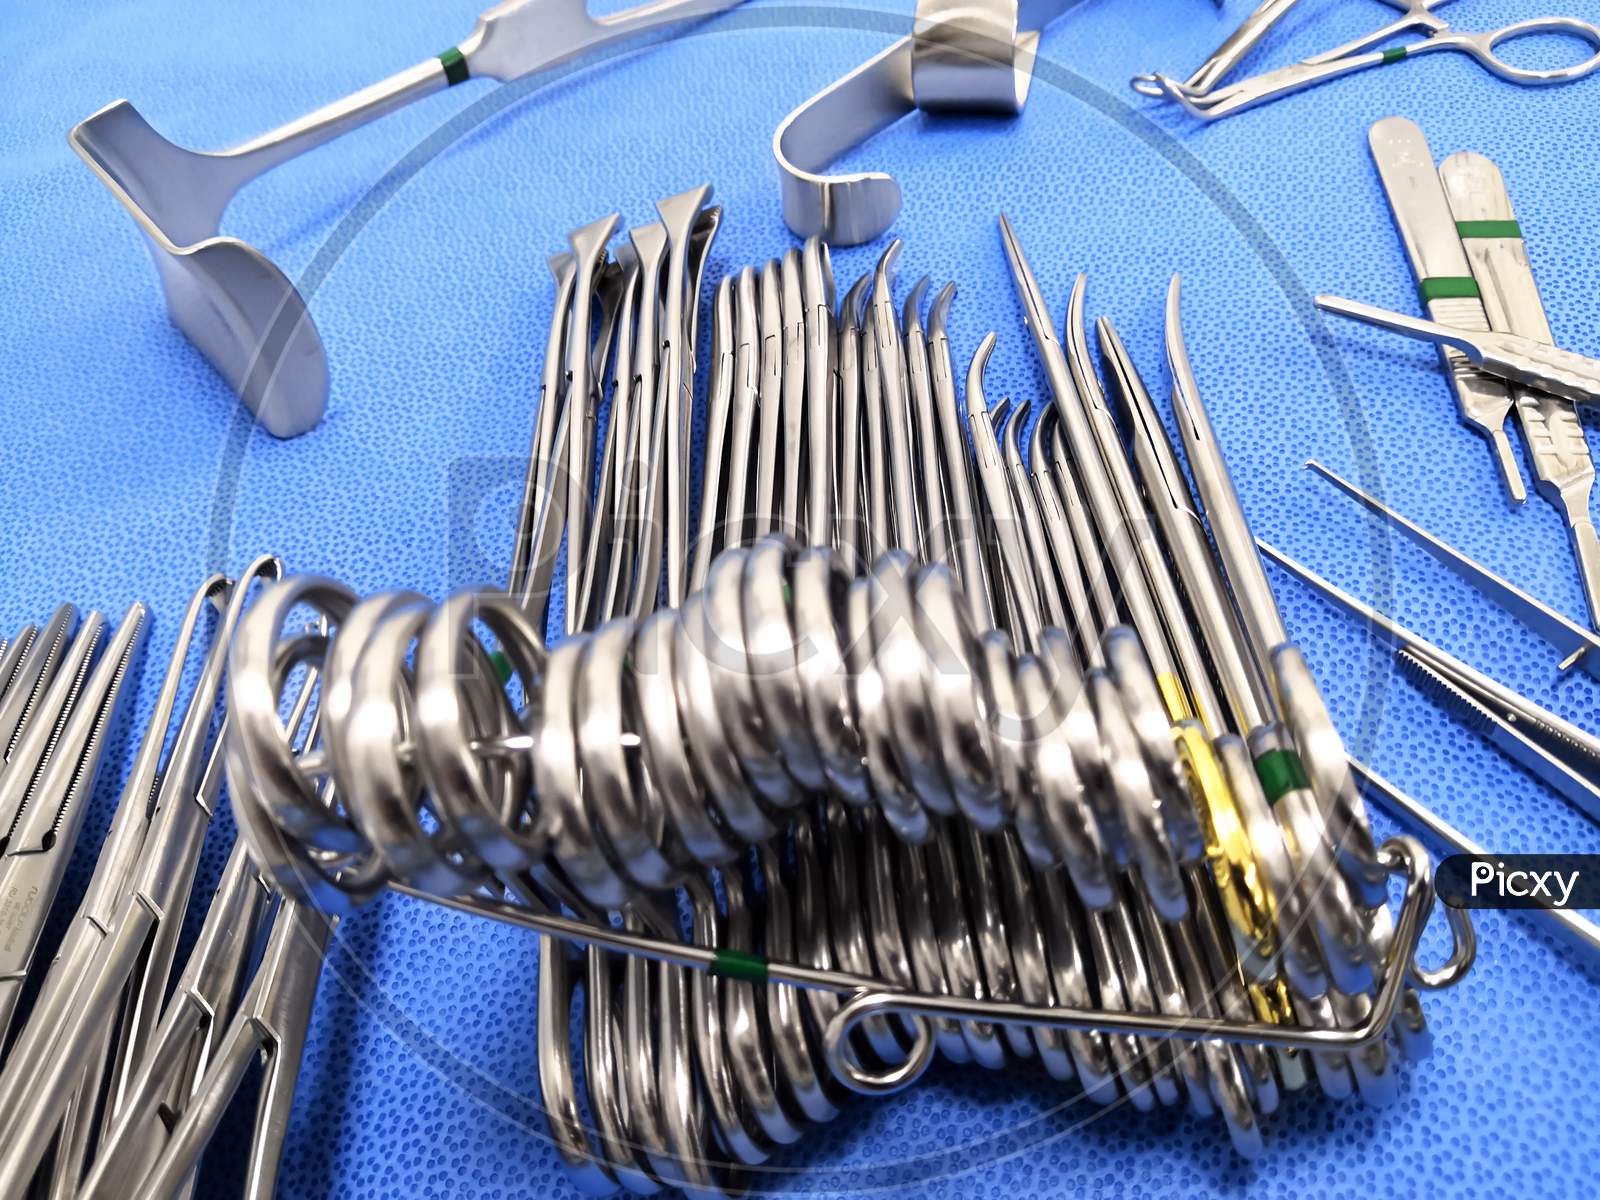 Arranged Surgical Instrument Of Lscs